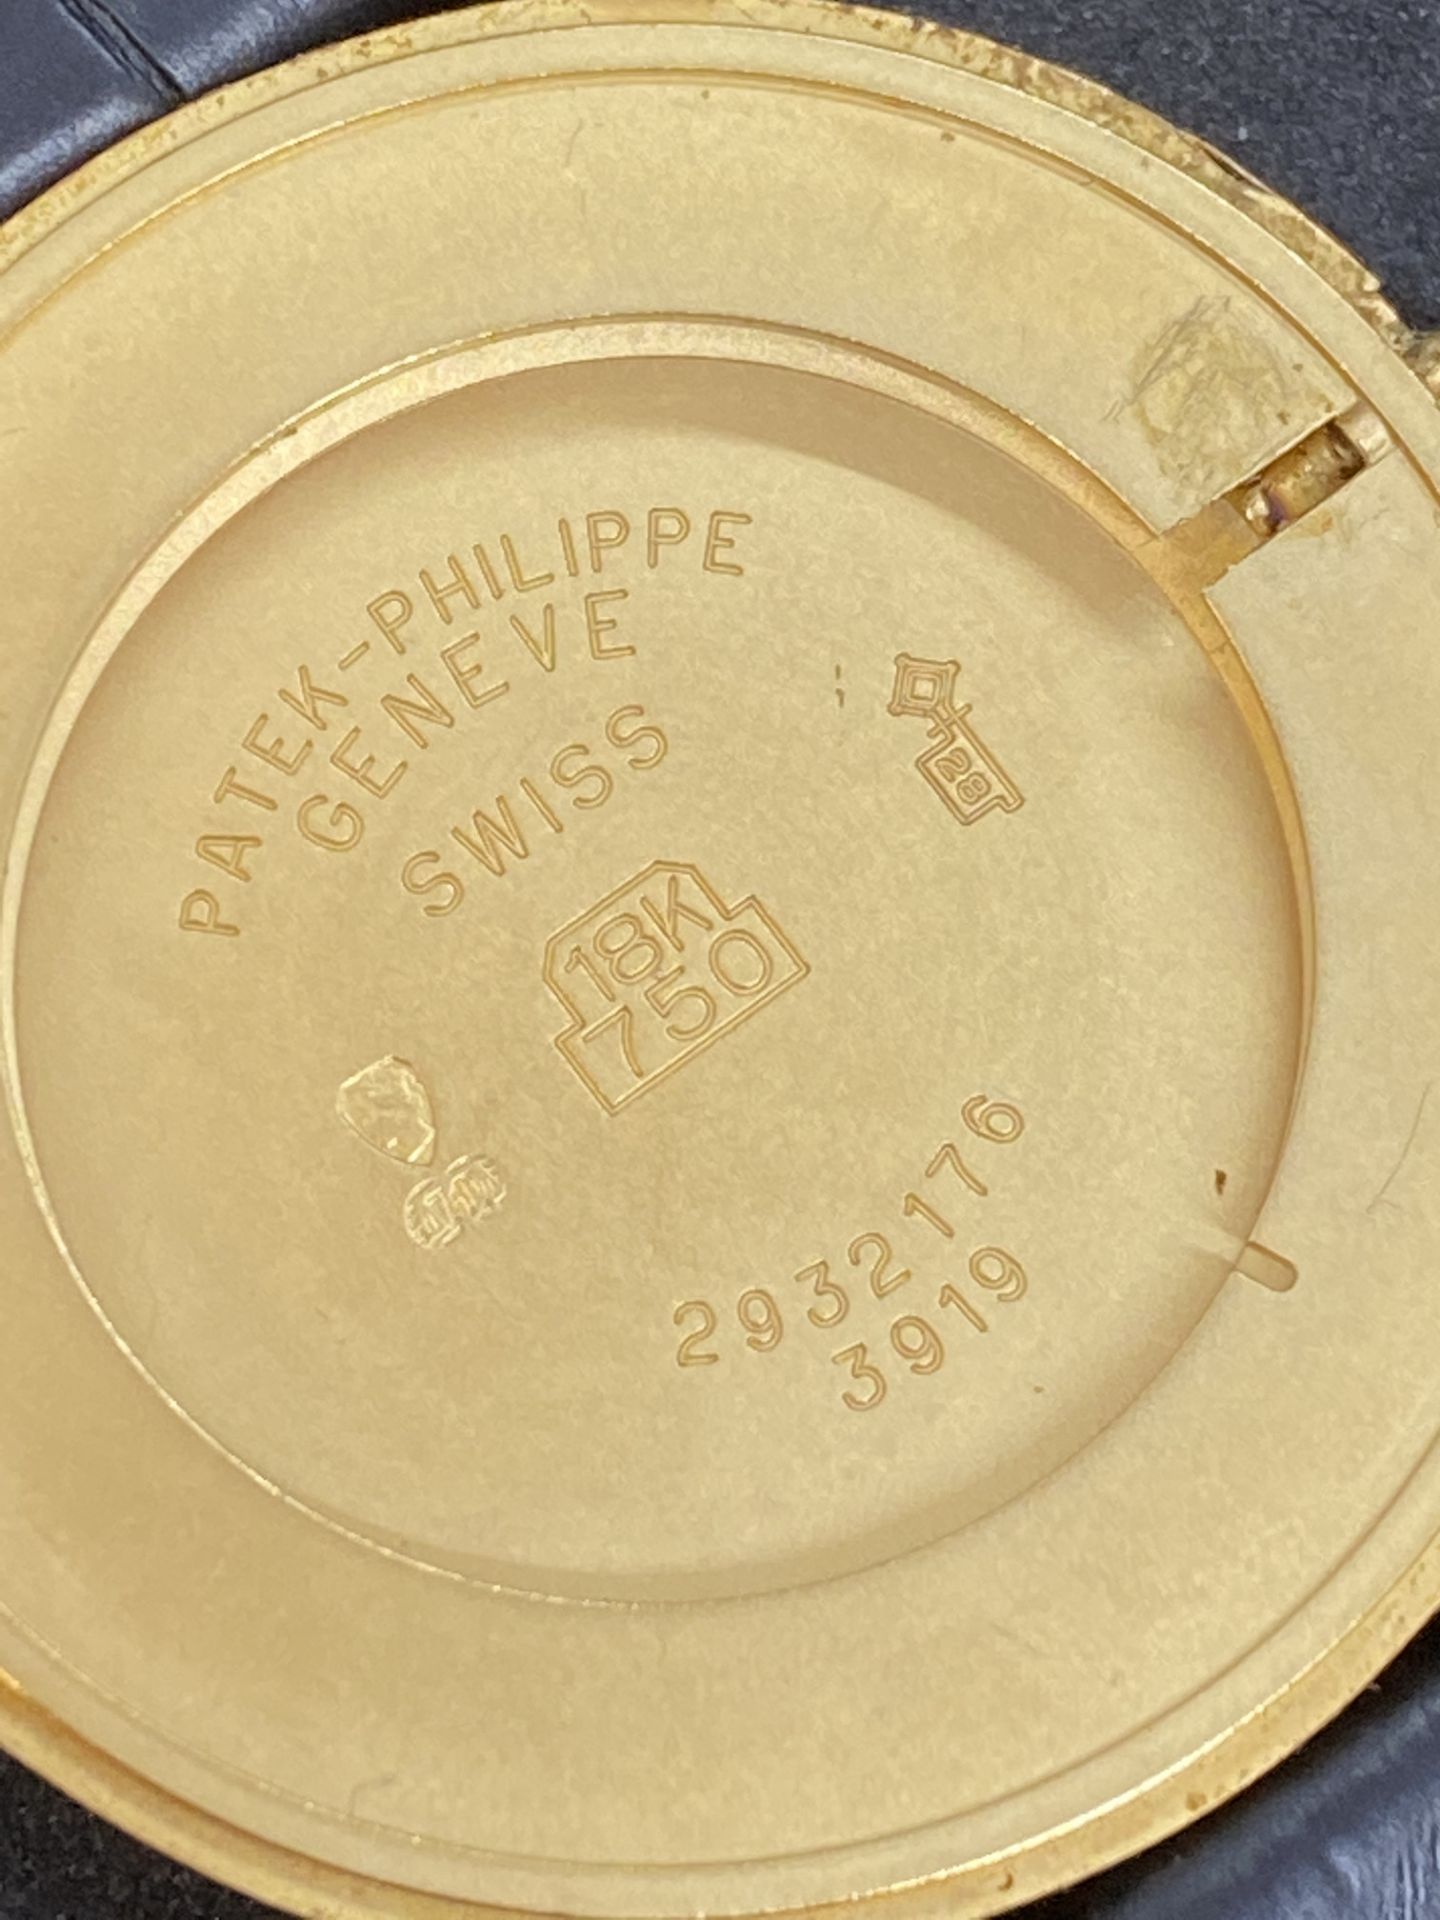 PATEK PHILIPPE 18ct GOLD CALATRAVA WATCH - Image 6 of 14